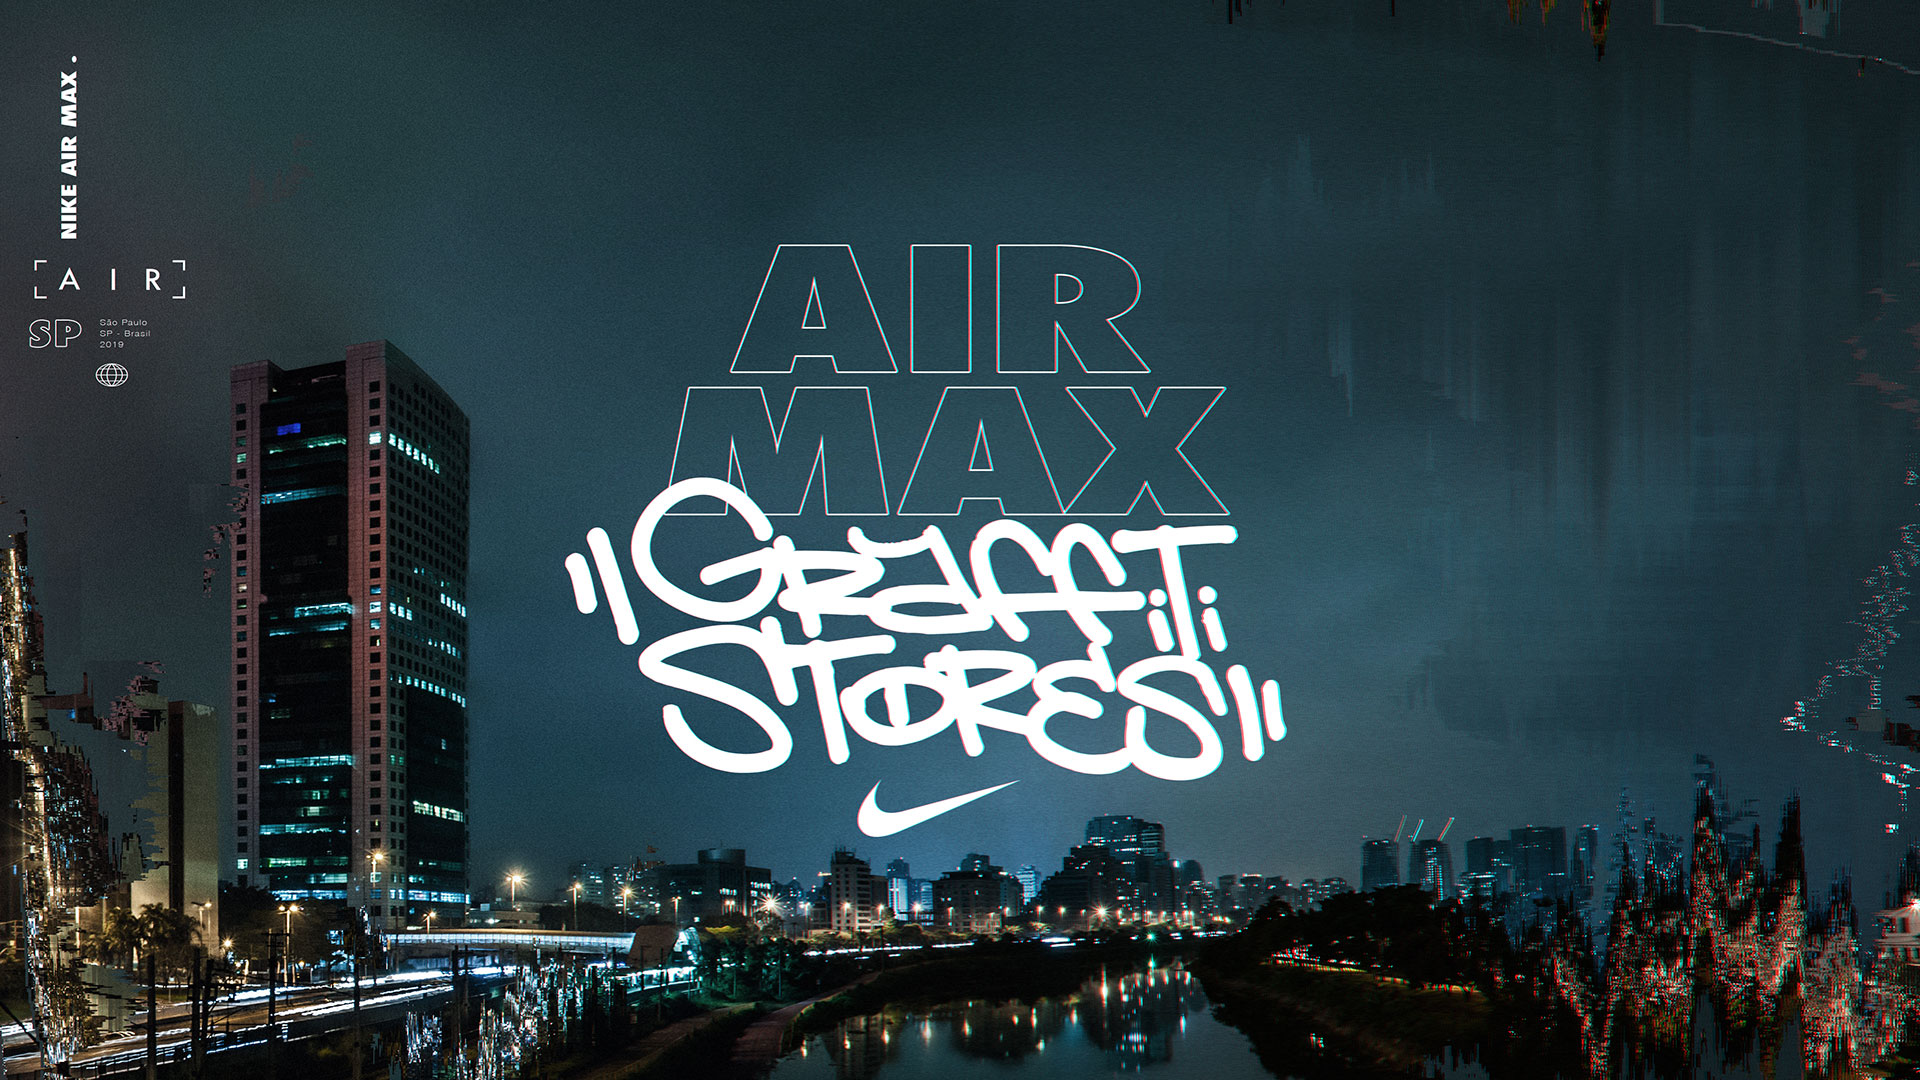 nike air max graffiti stores